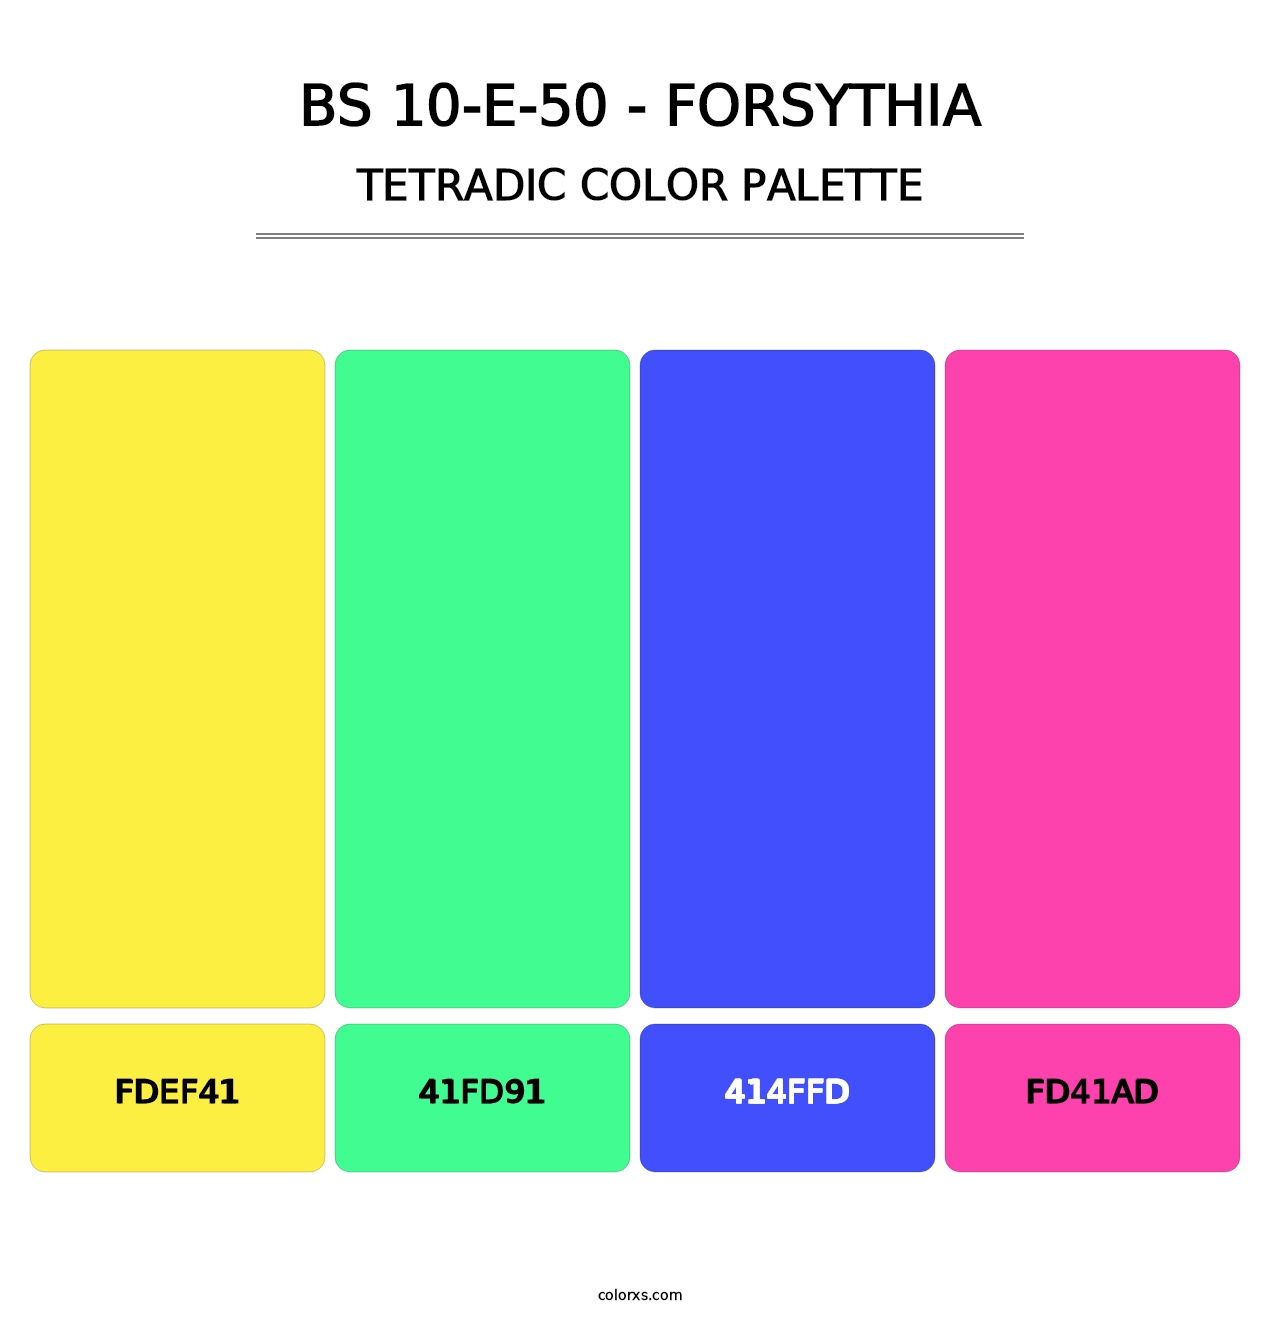 BS 10-E-50 - Forsythia - Tetradic Color Palette